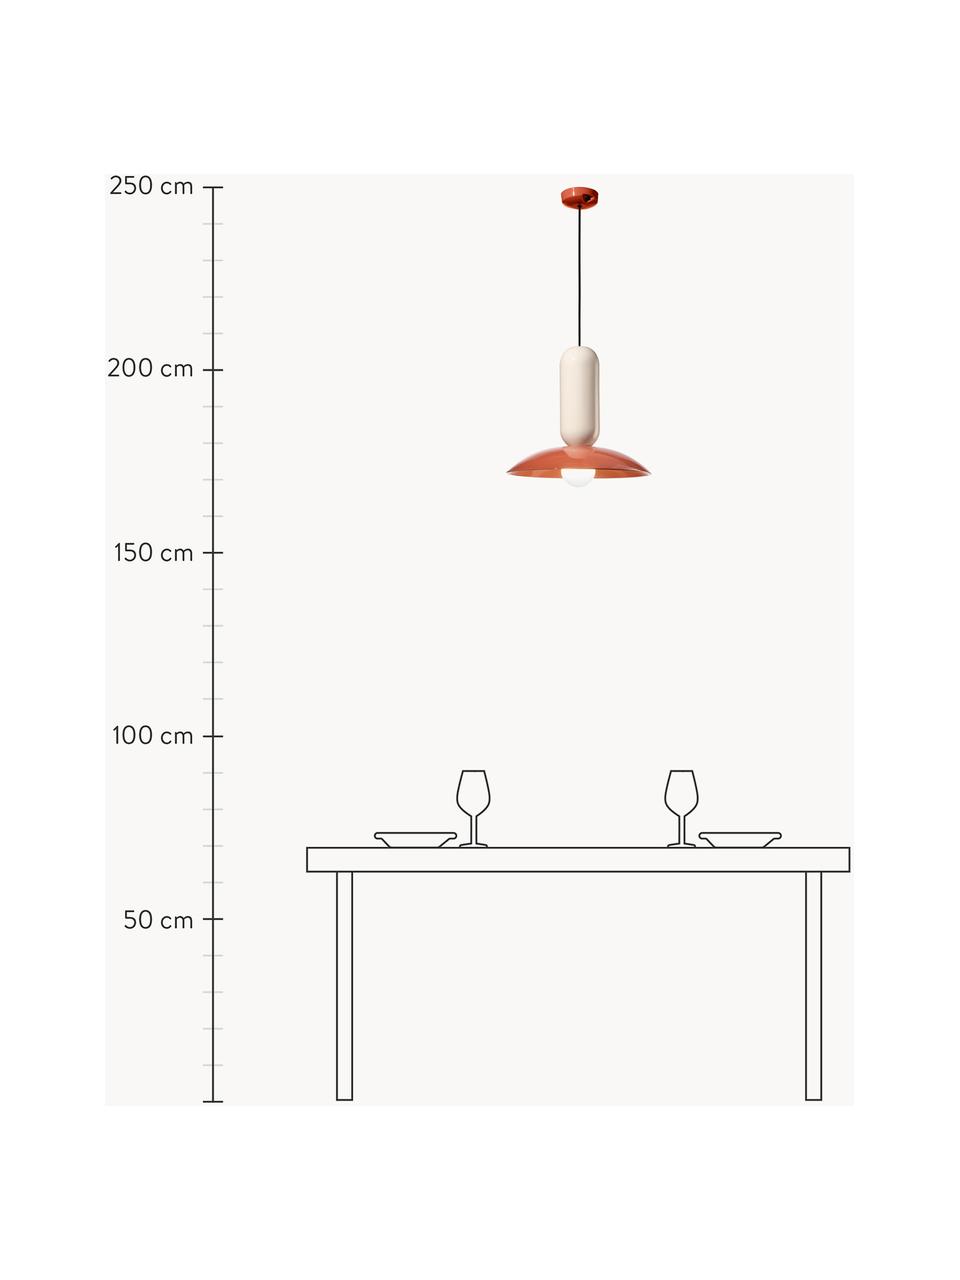 Handgemaakte hanglamp Pau, Lampenkap: keramiek, Terracotta, gebroken wit, Ø 40 x H 36 cm